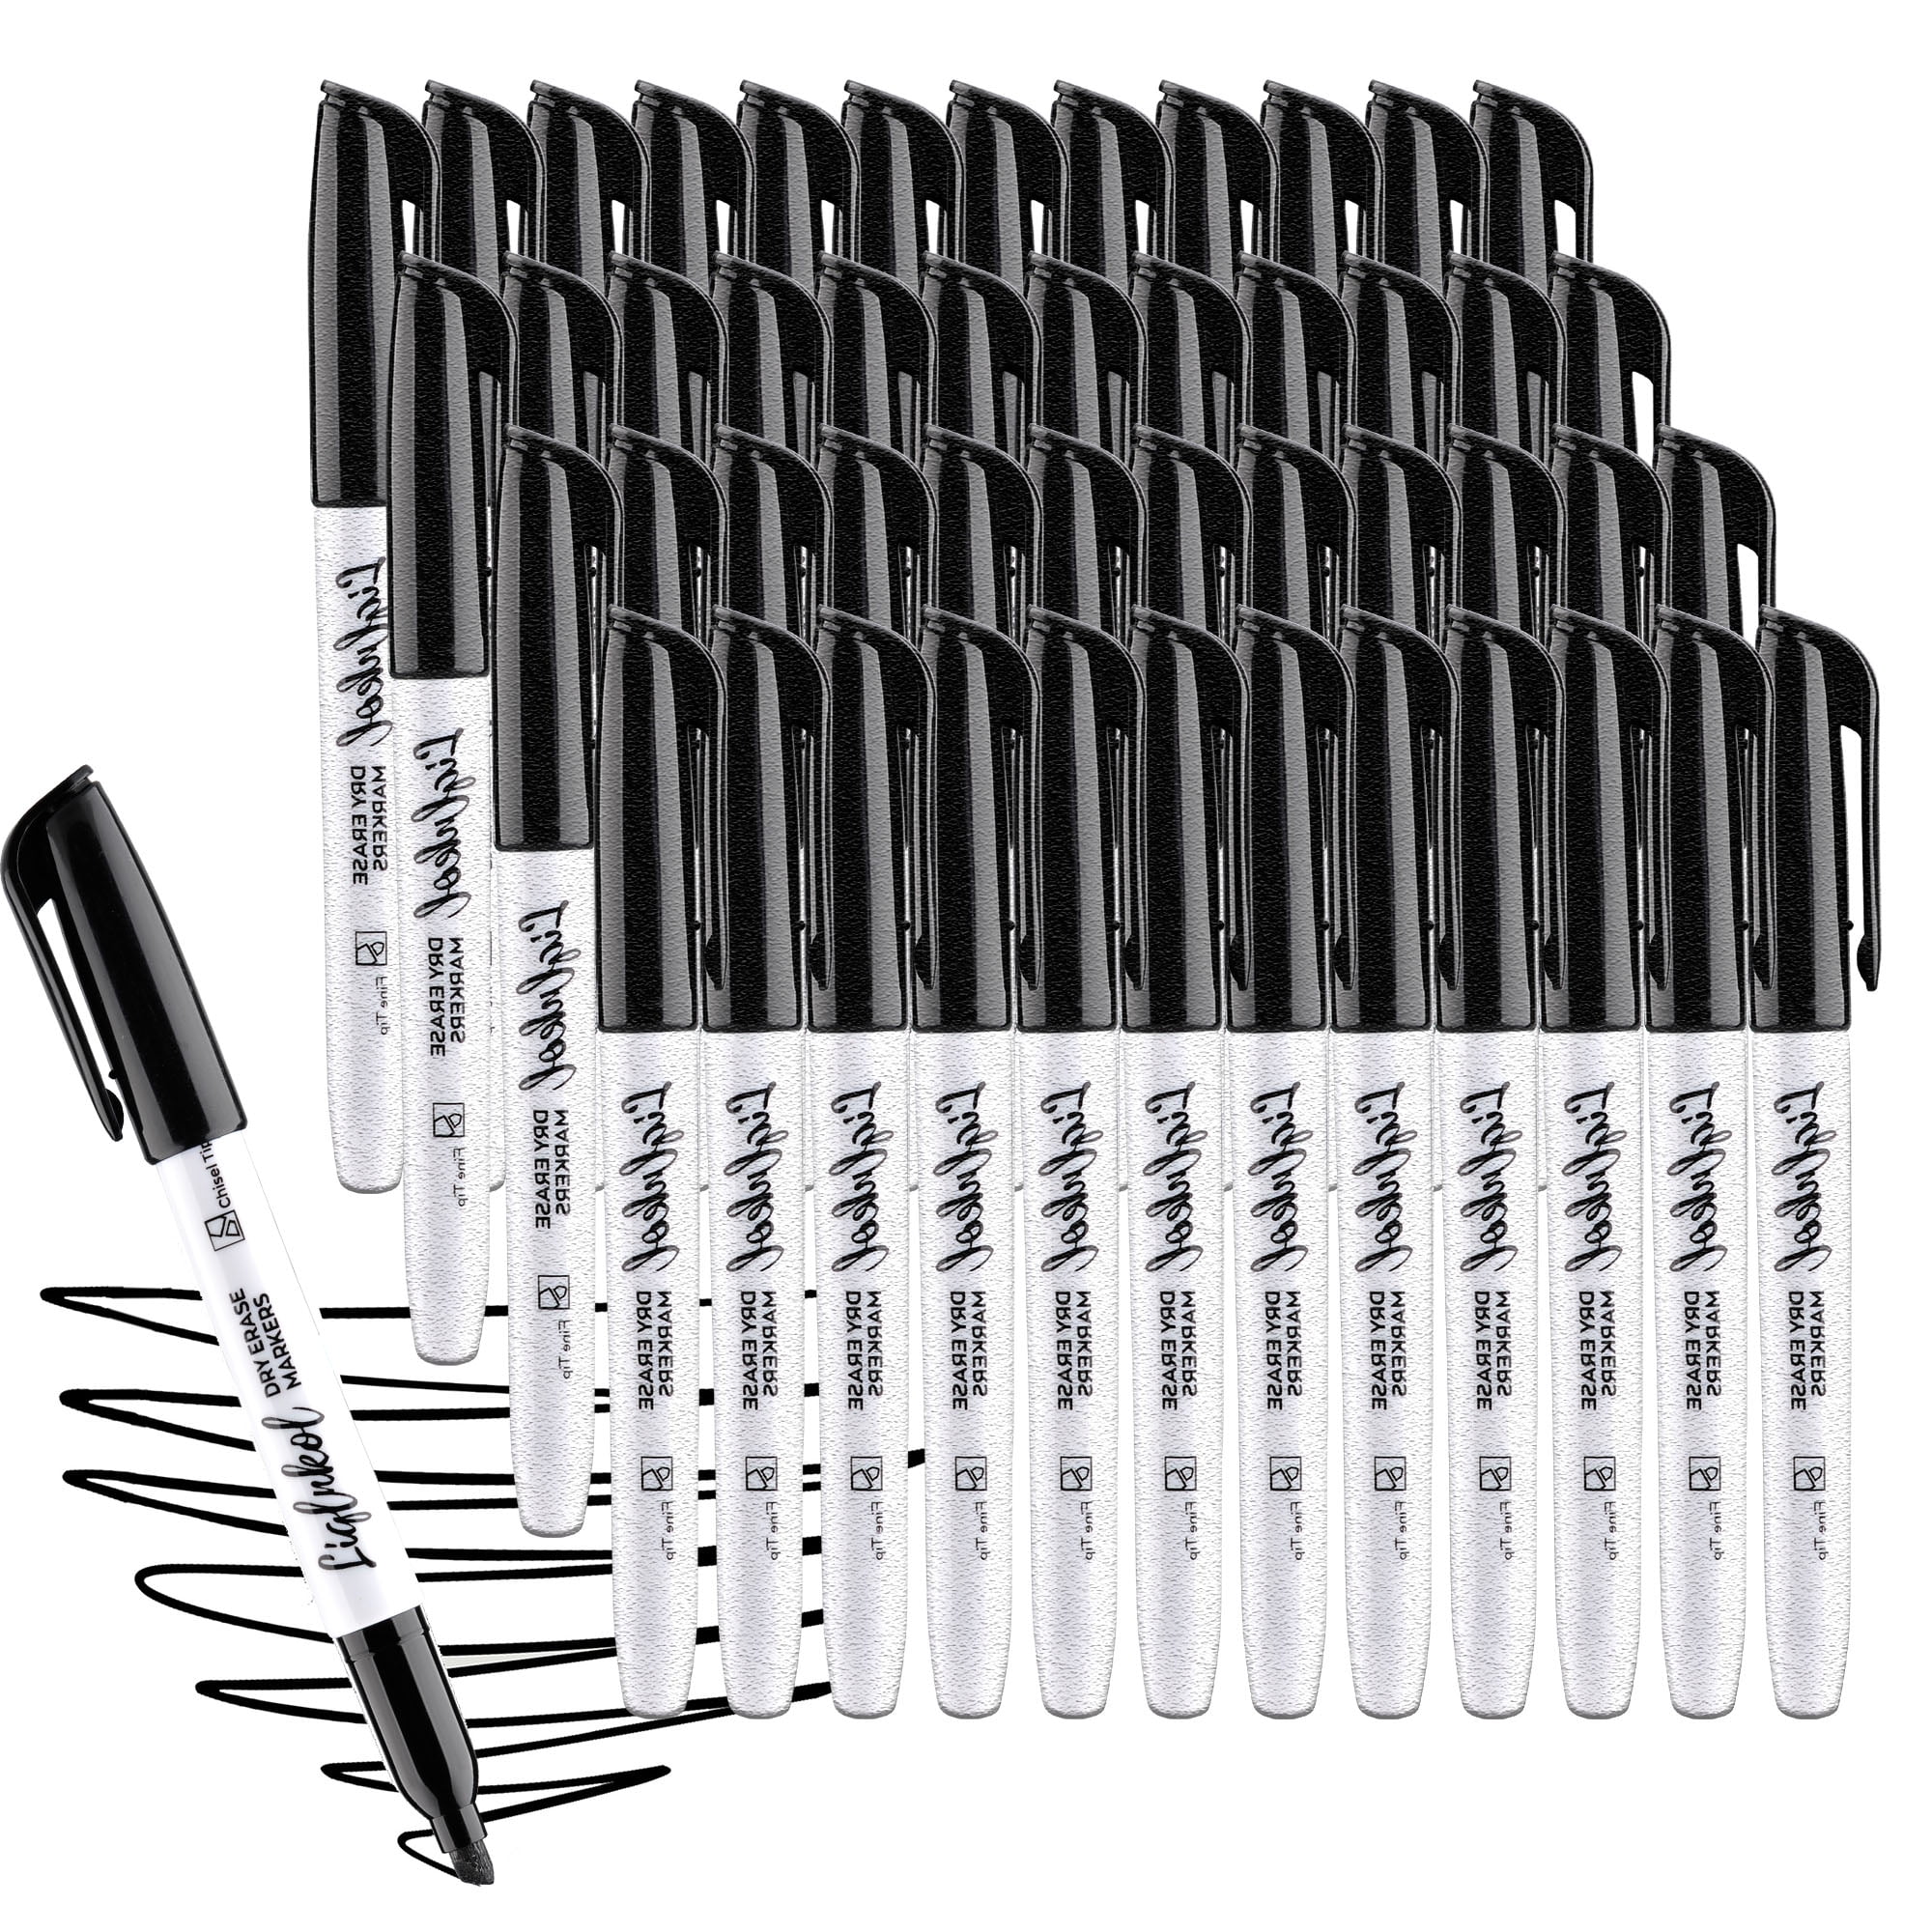 Dry Erase Markers, Black Color with Low-Odor Ink – orientools